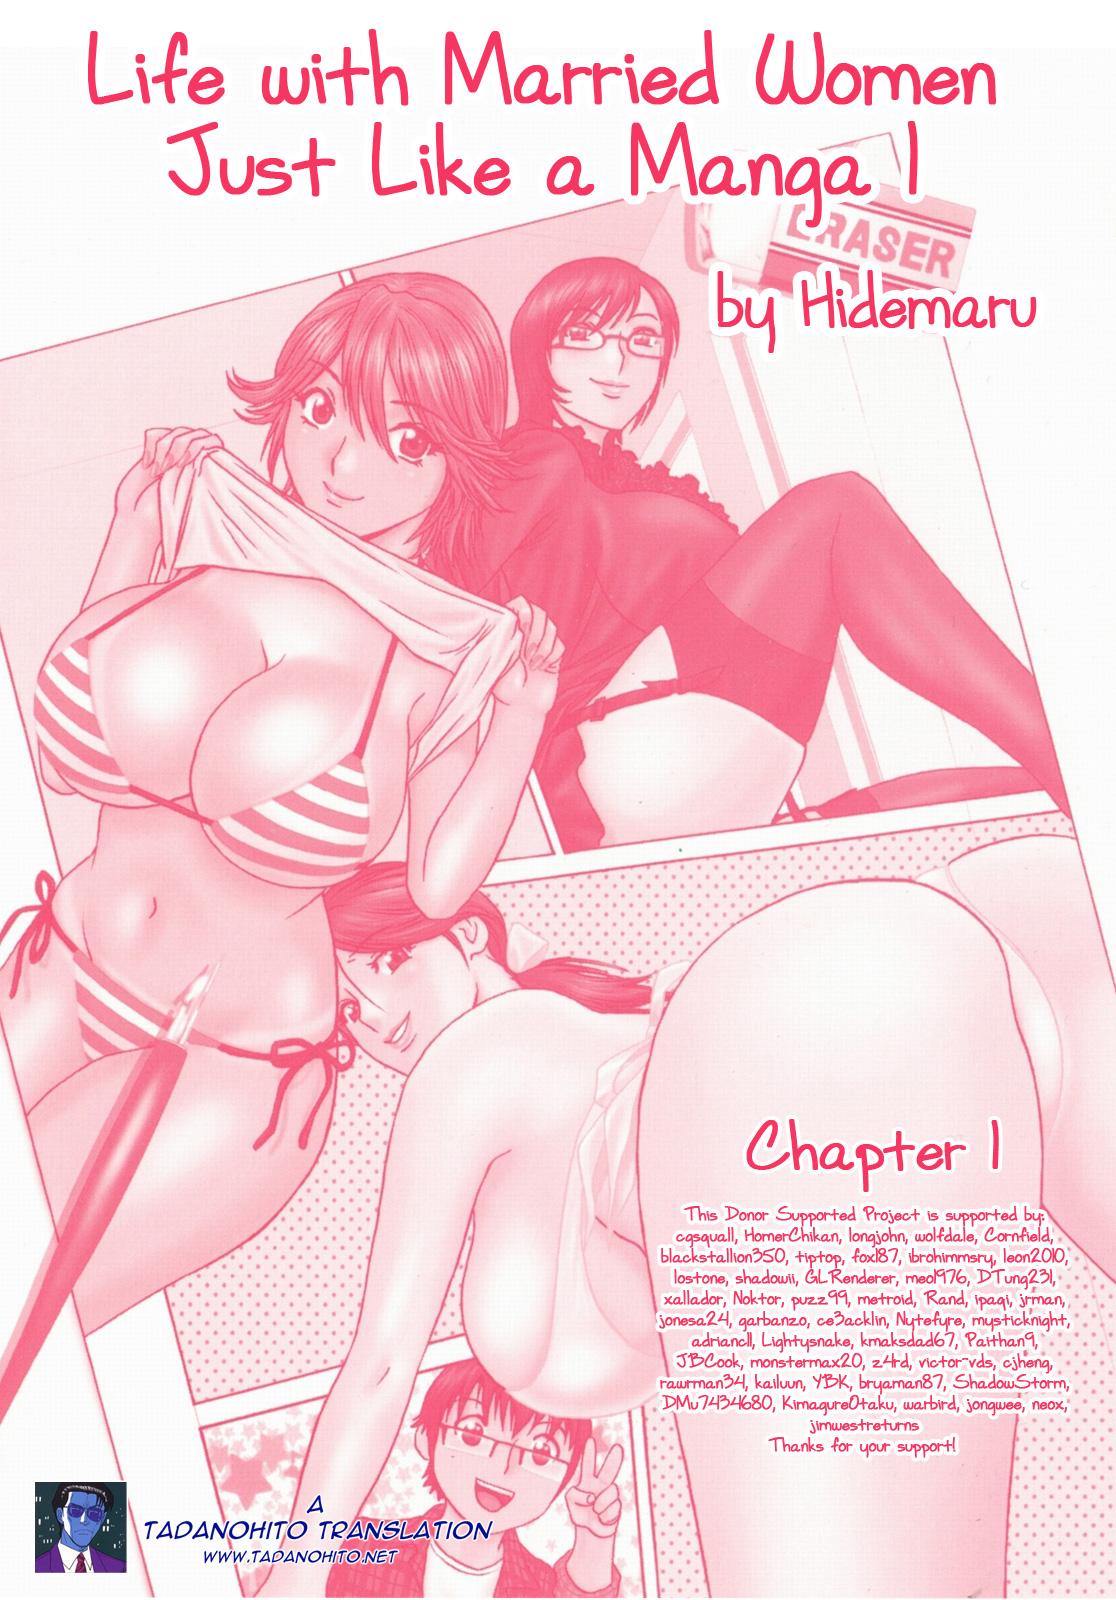 [Hidemaru] Life with Married Women Just Like a Manga 1 - Ch. 1-4 [English] {Tadanohito} 25